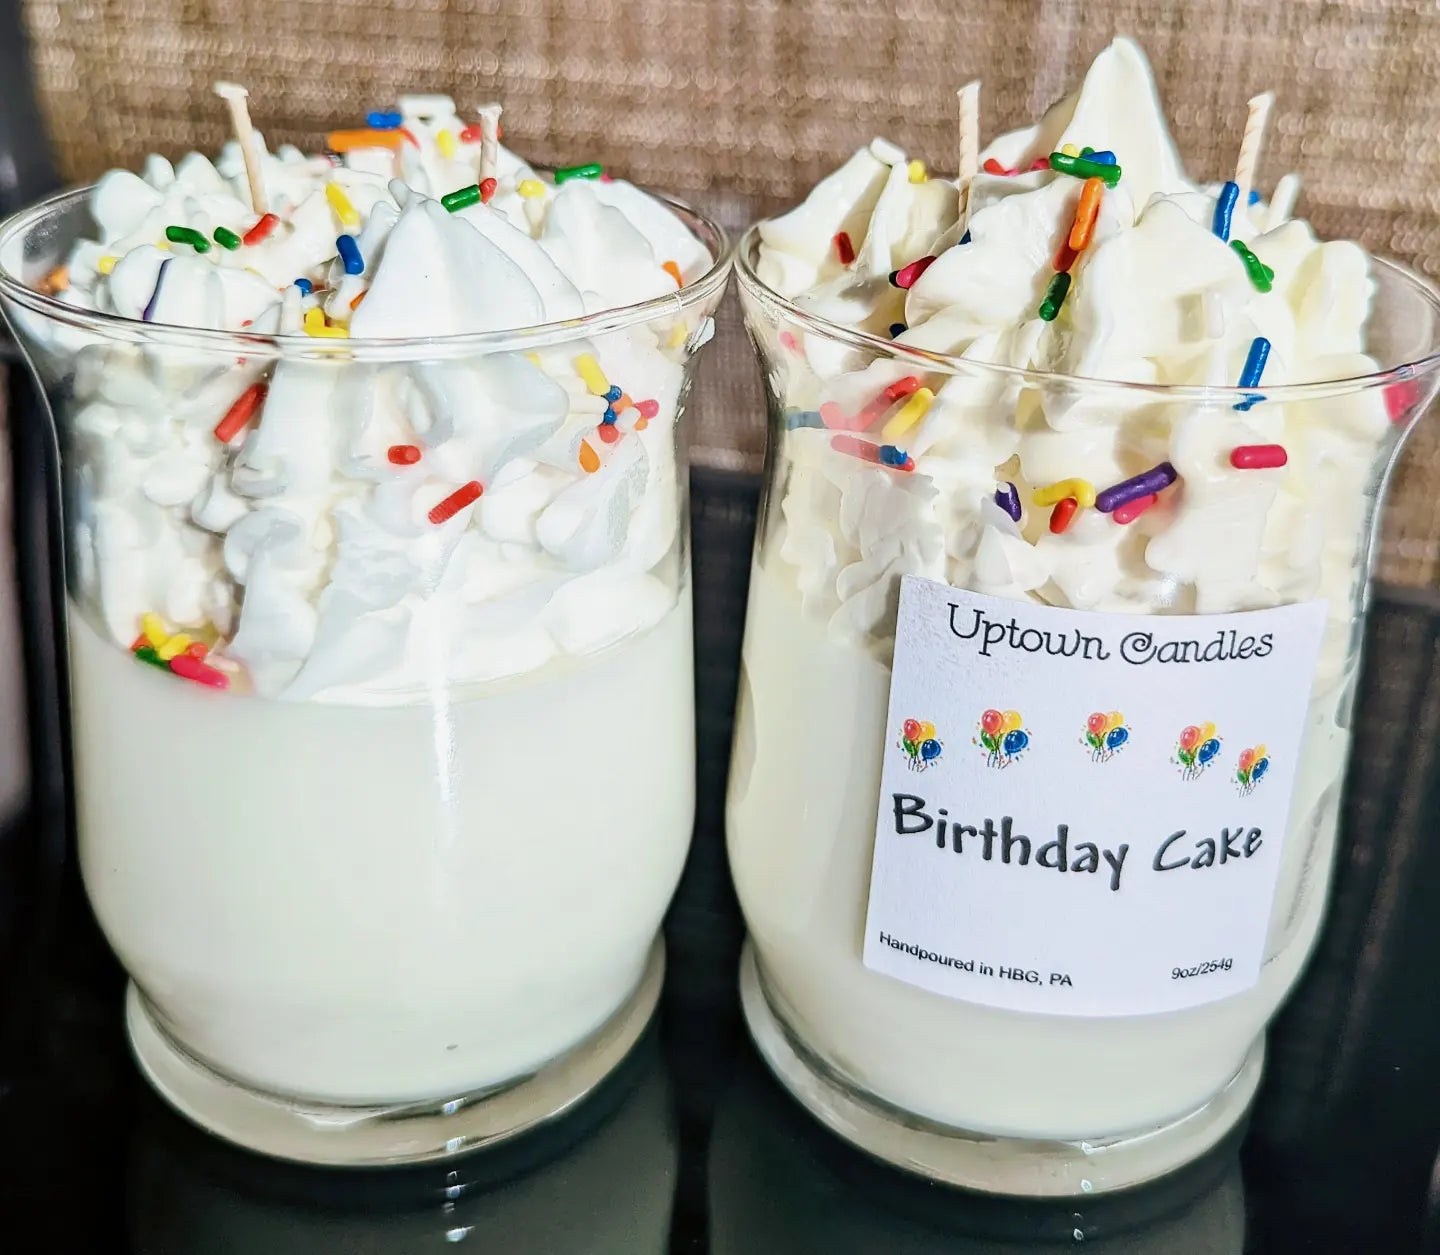 50 Dessert Candles/Wholesale